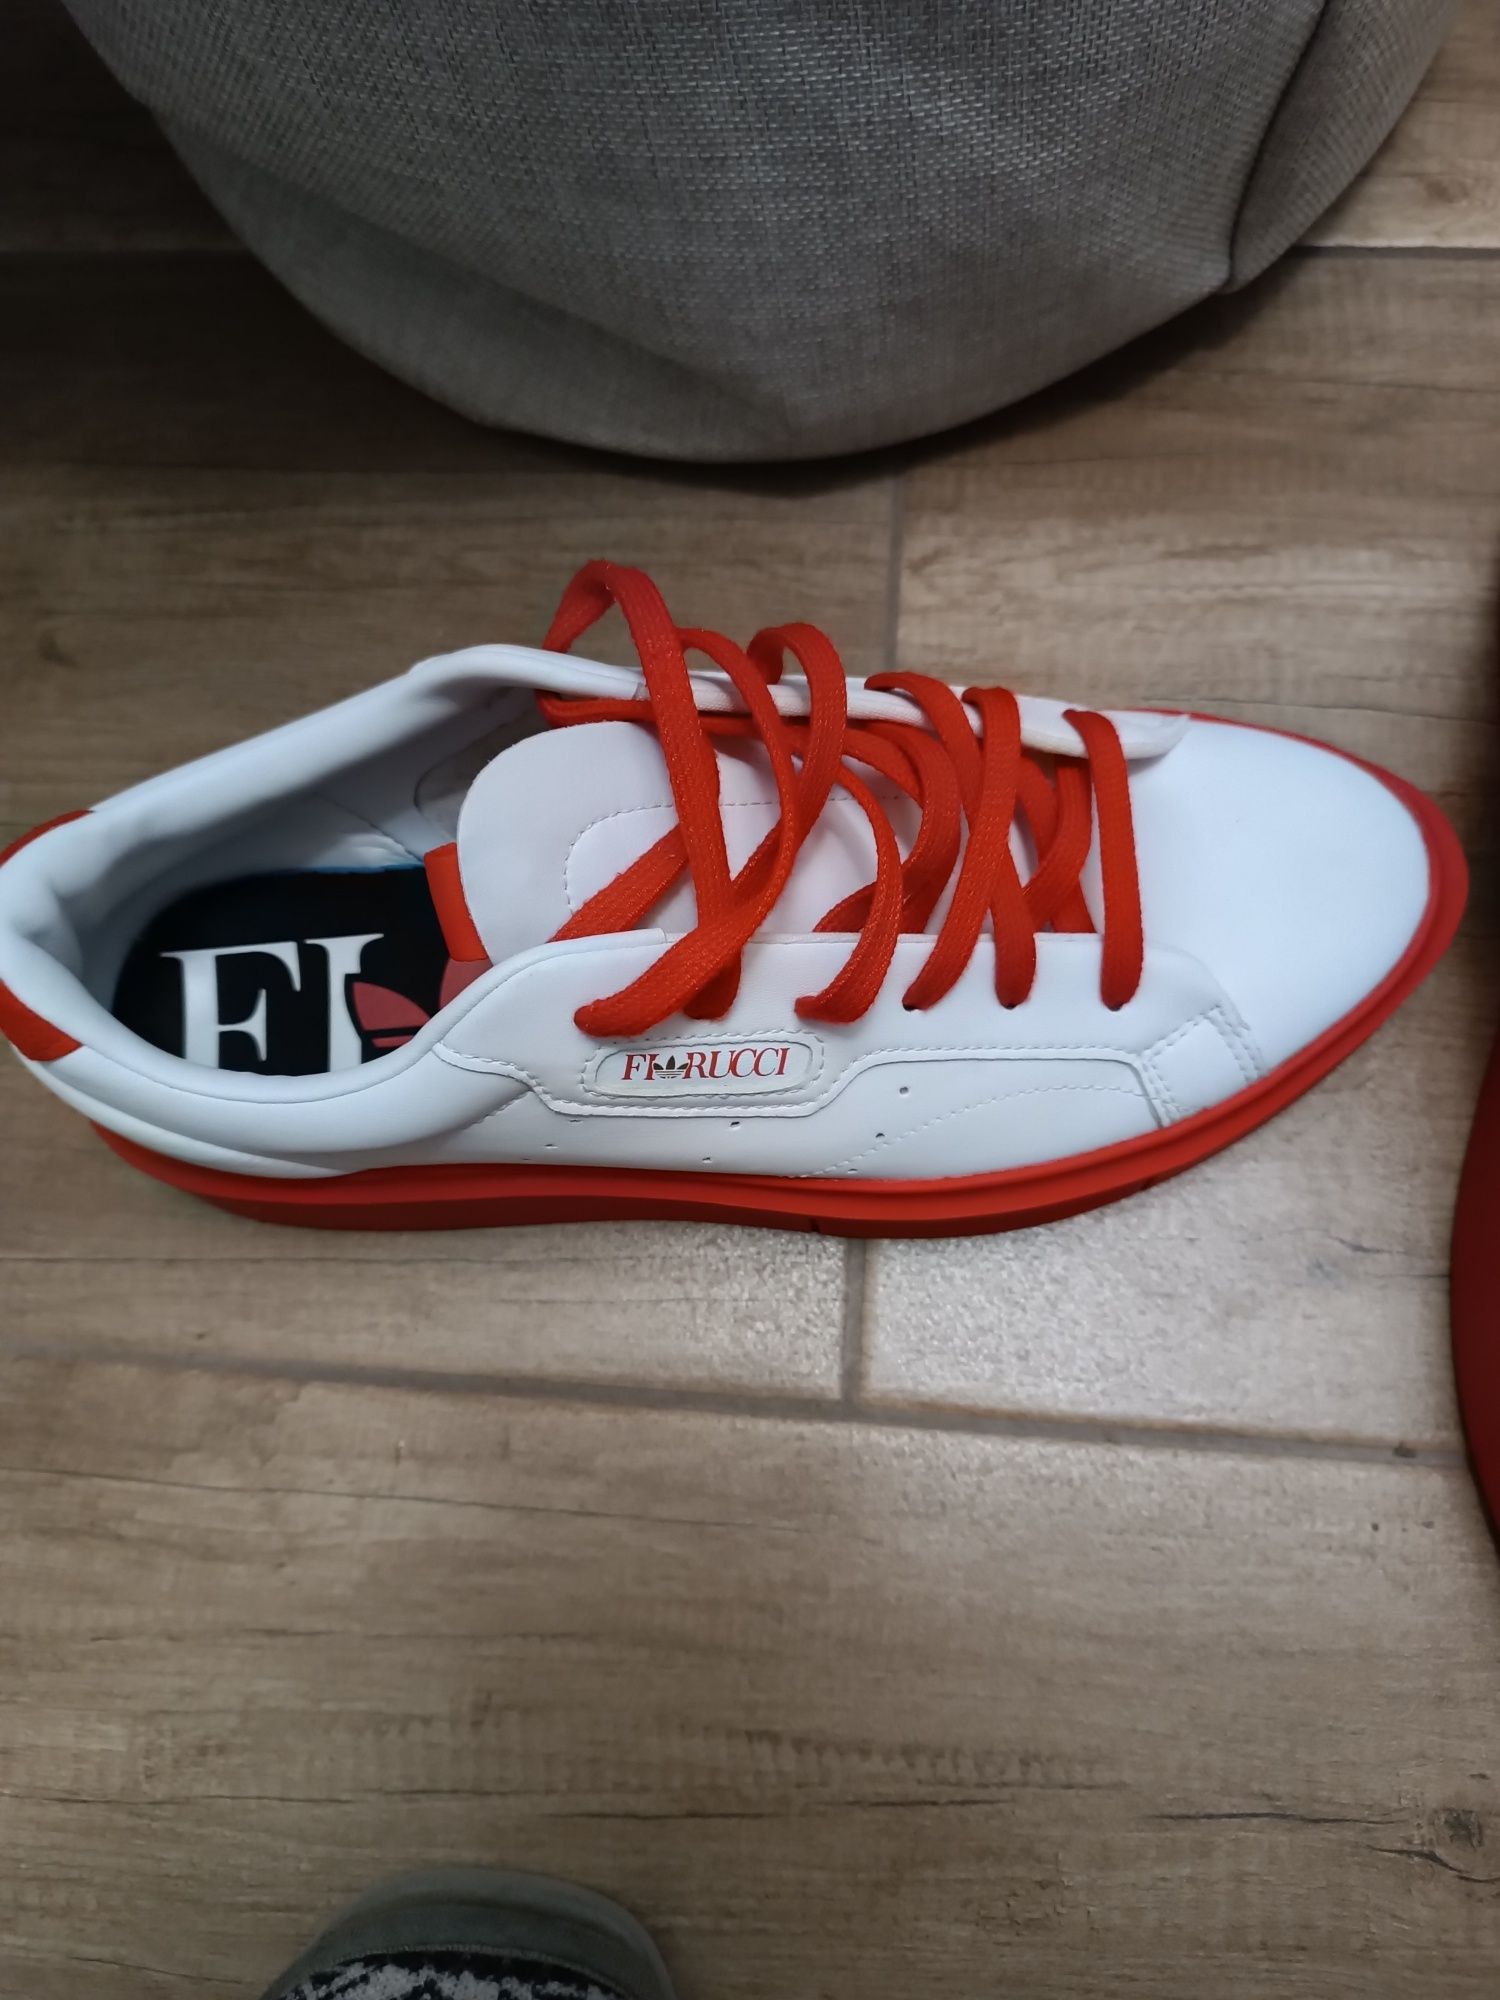 Adidas x Fiorucci Sleek